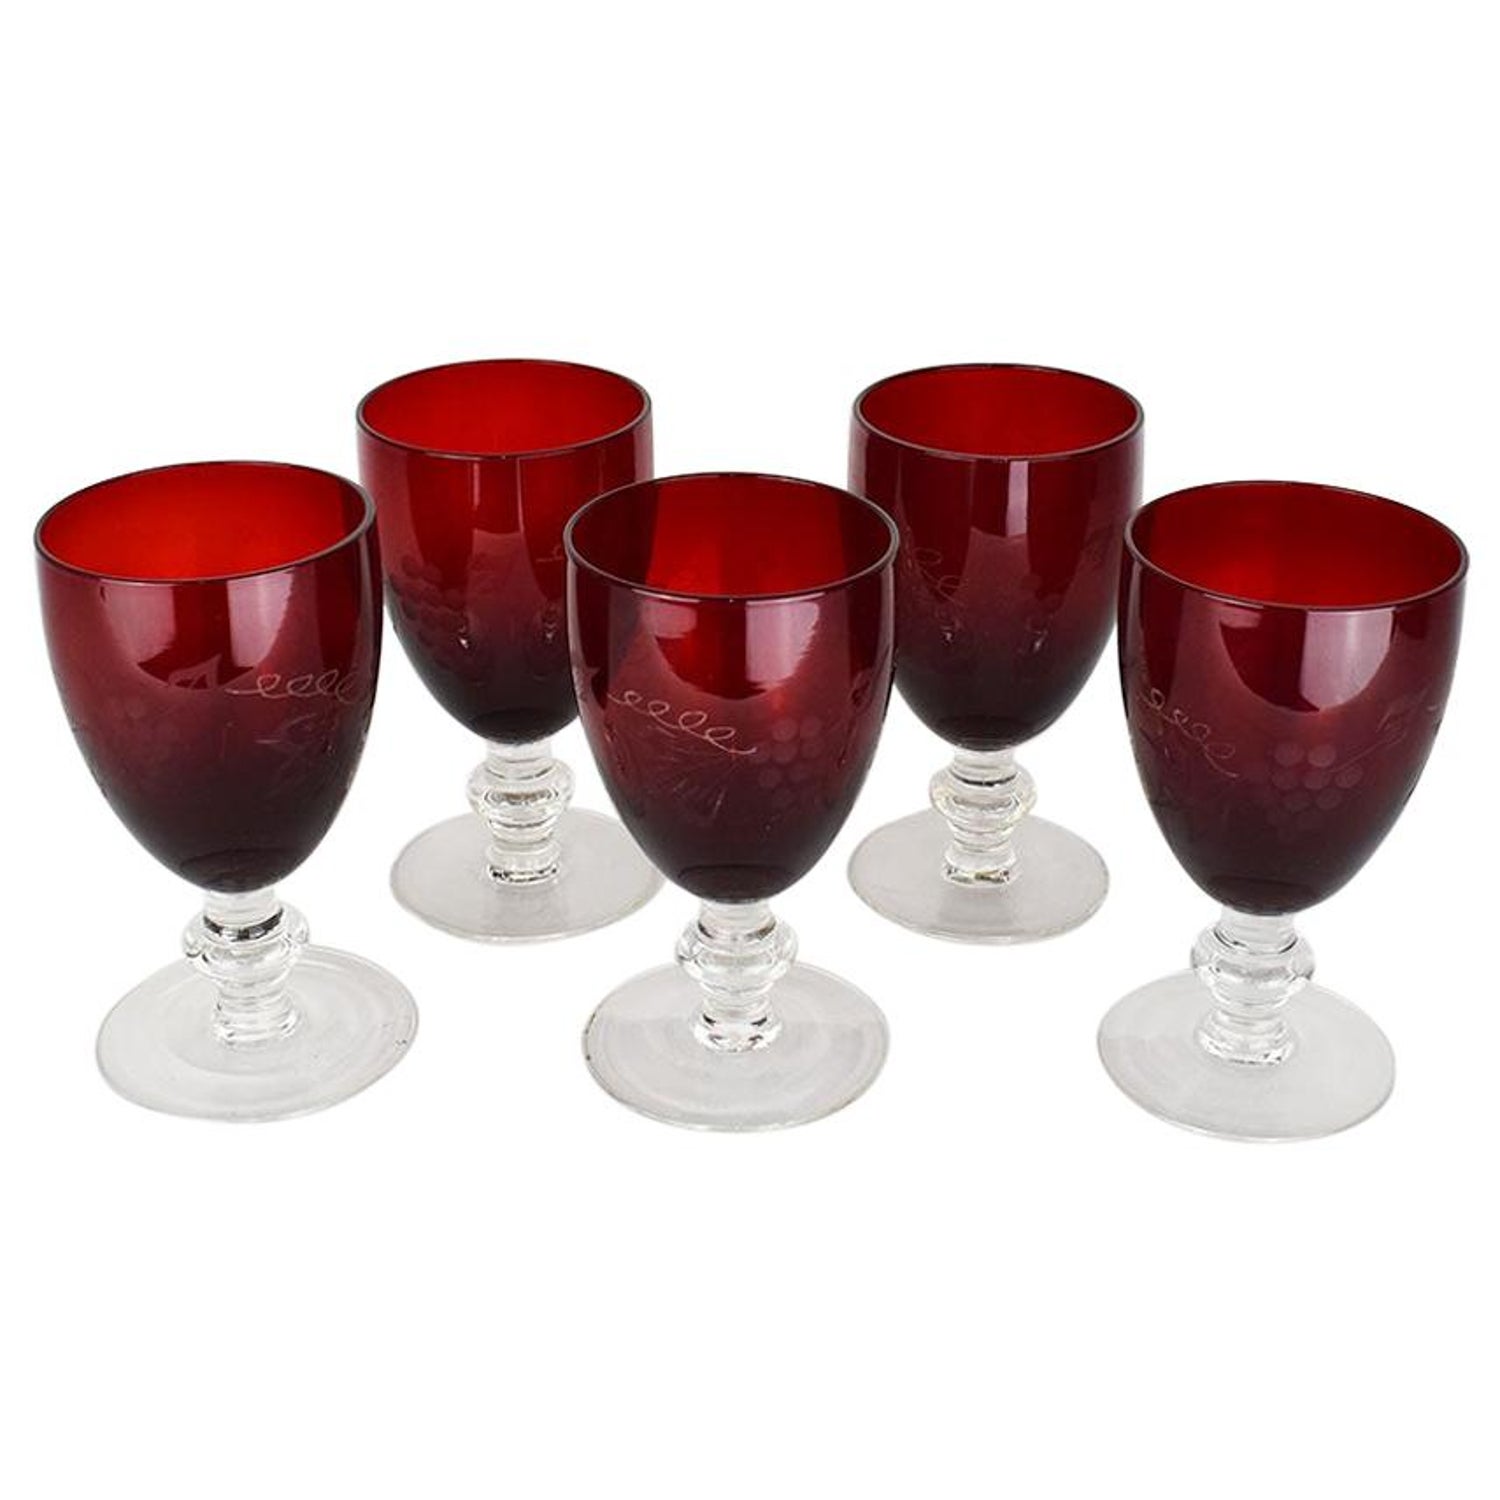 https://a.1stdibscdn.com/ruby-red-etched-glass-stemmed-goblet-glasses-with-grape-design-for-sale/1121189/f_200745421597980352179/20074542_master.jpg?width=1500